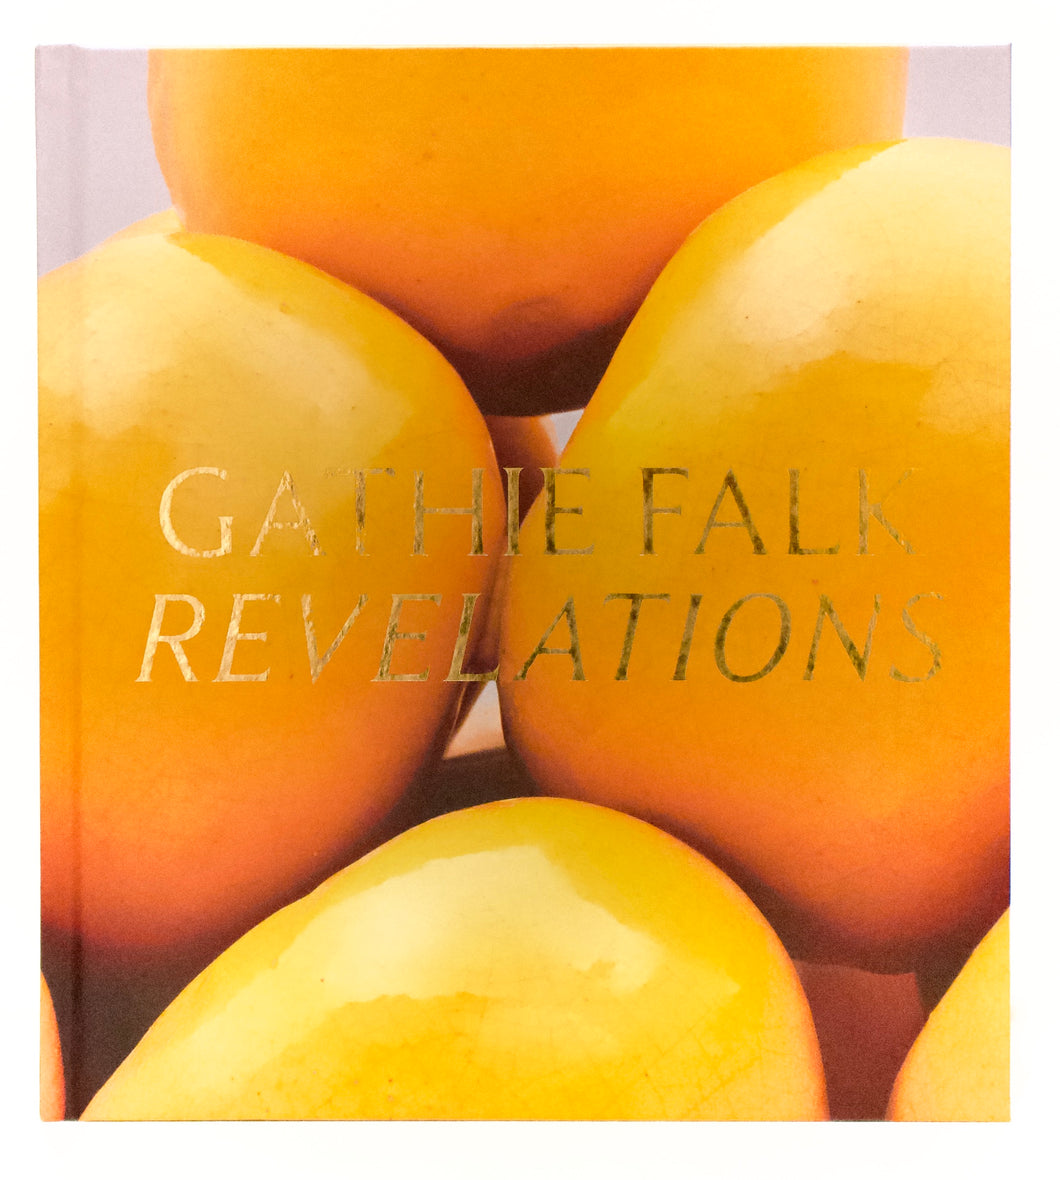 Gathie Falk: Revelations Publication